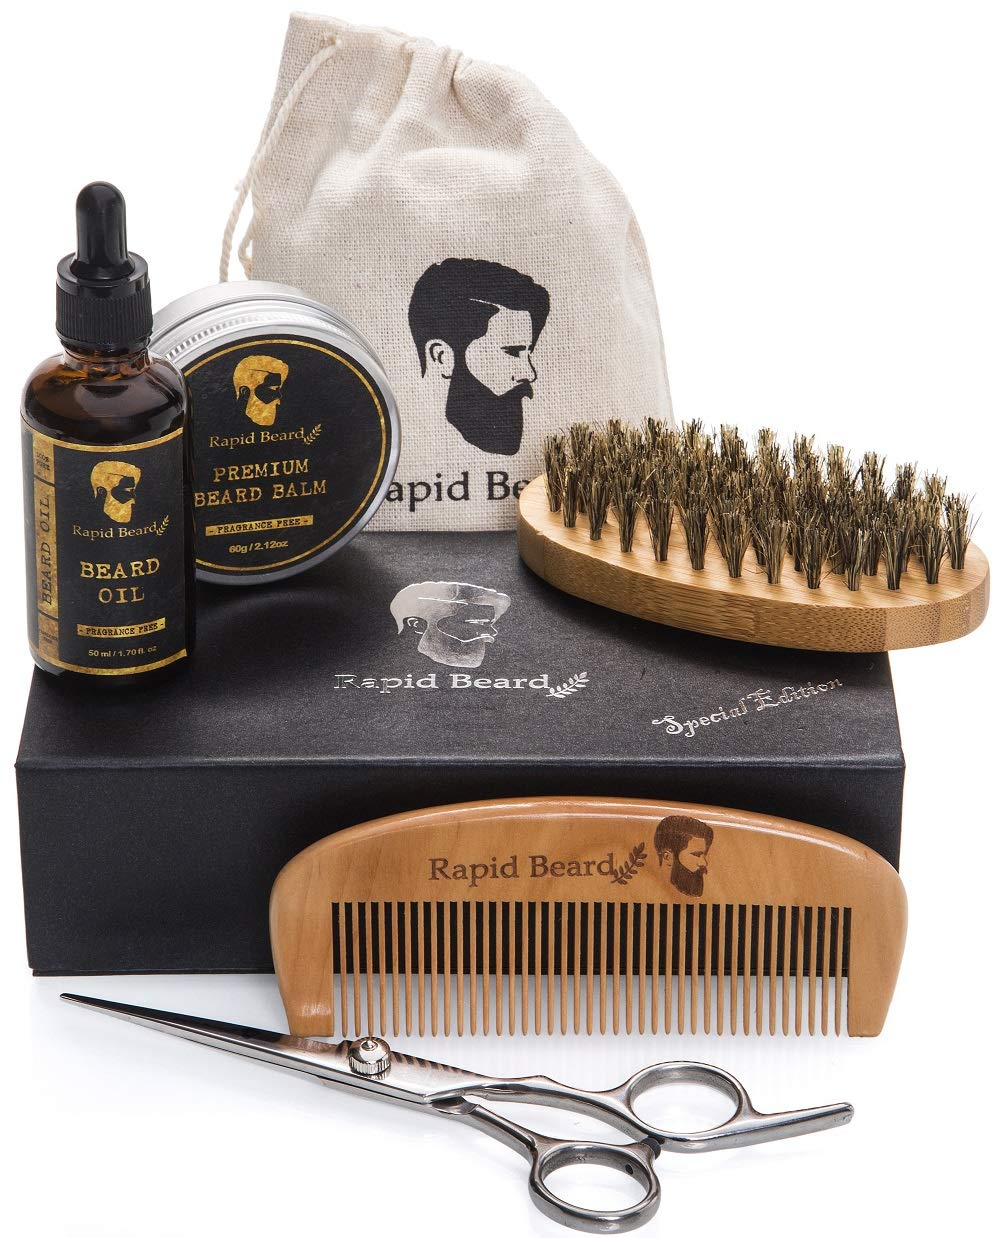 Valentine's day gift for him - beard grooming kit